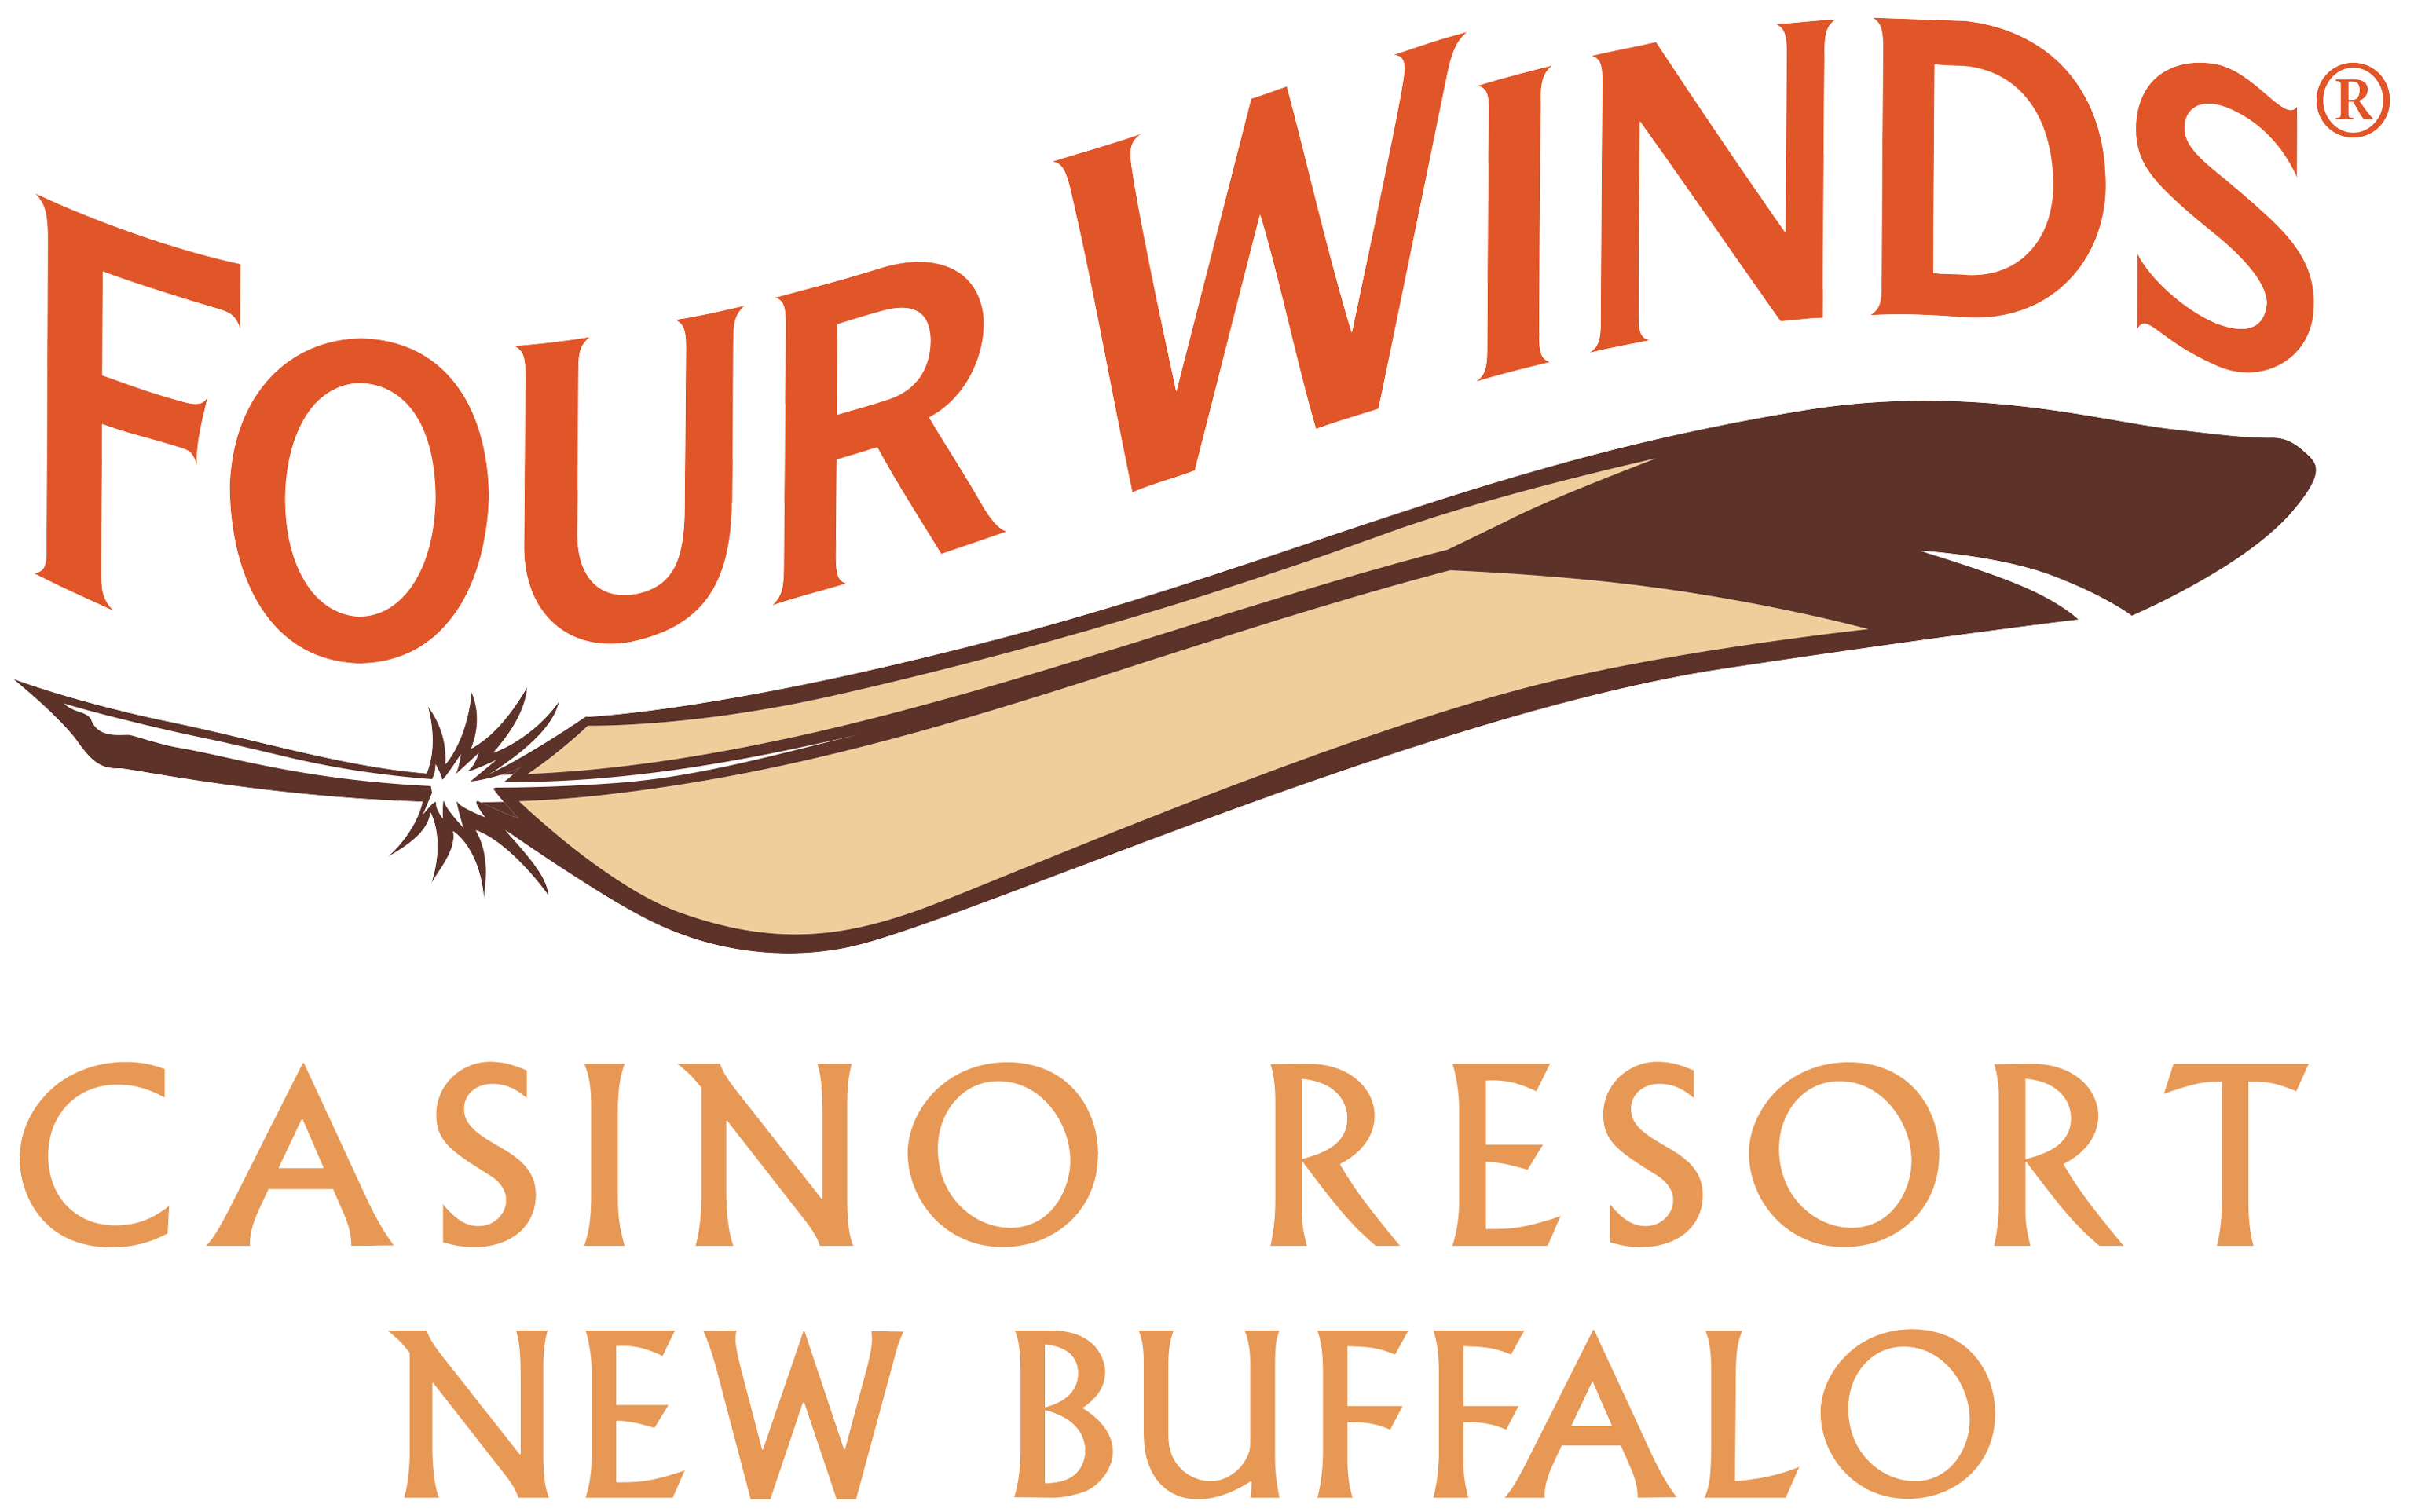 Four Winds Casino–New Buffalo, MI